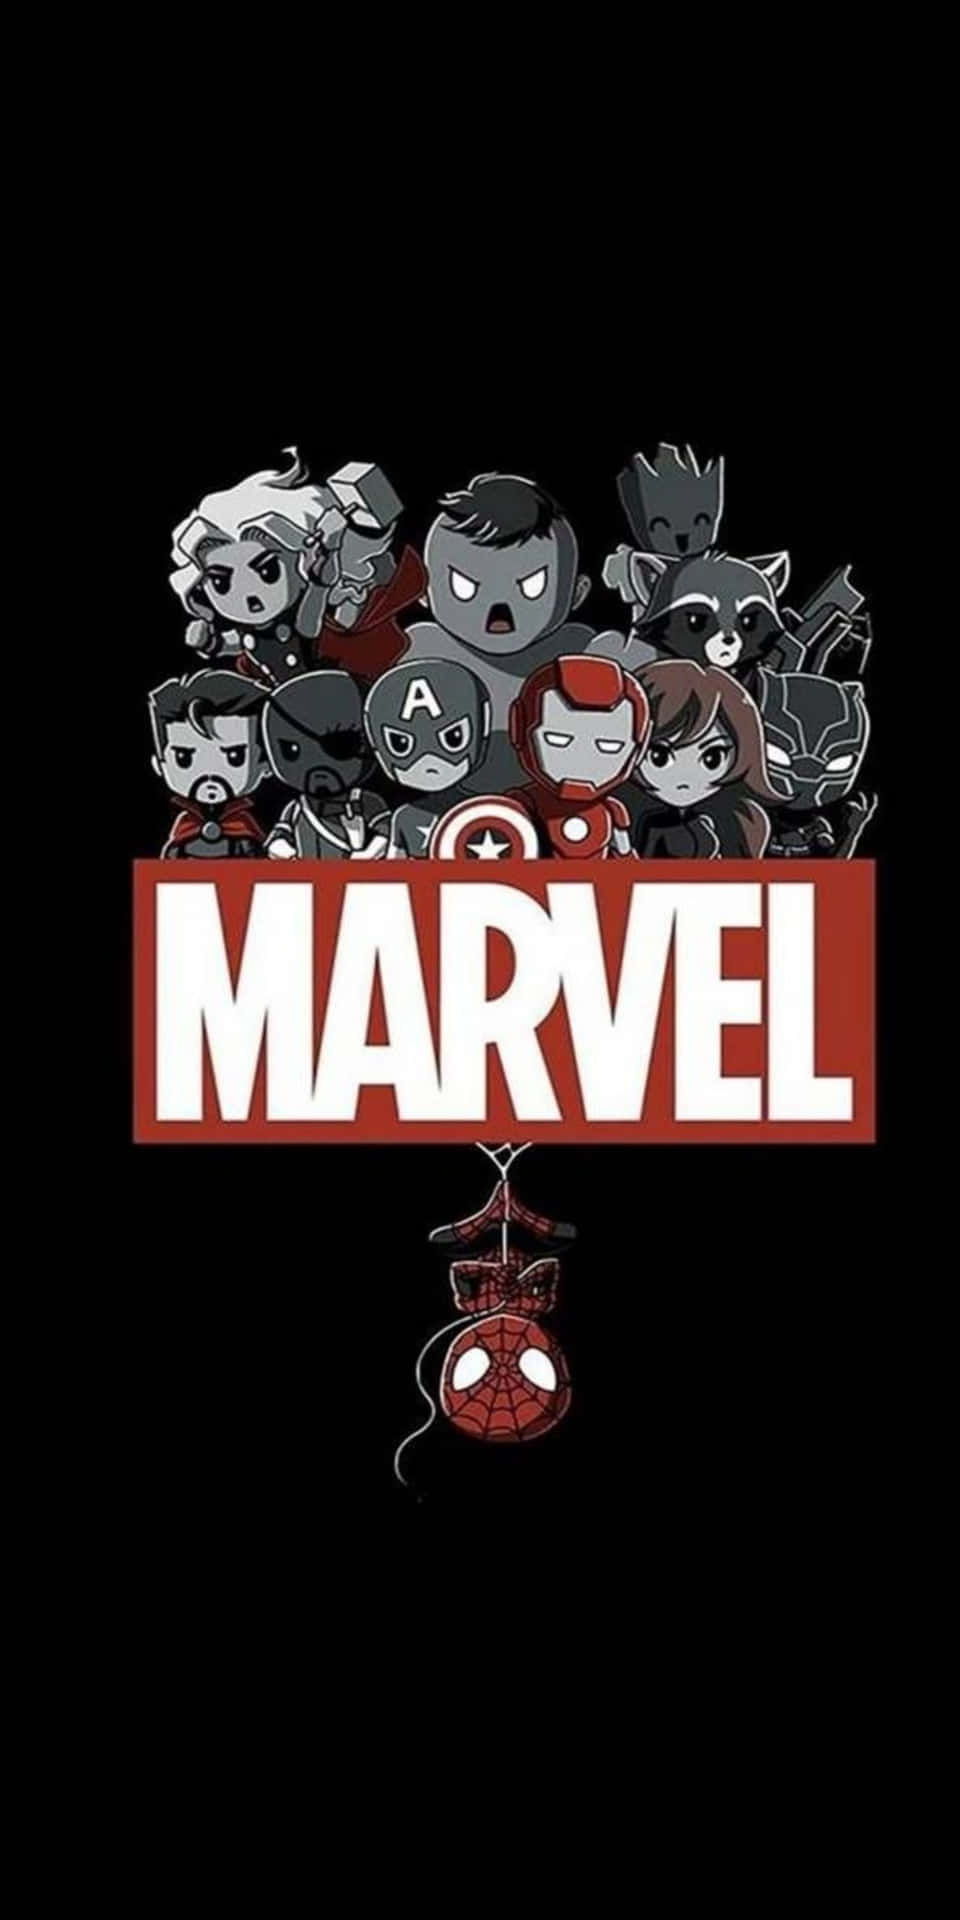 Chibi Heroes Pixel 3 Marvel's Avengers Background